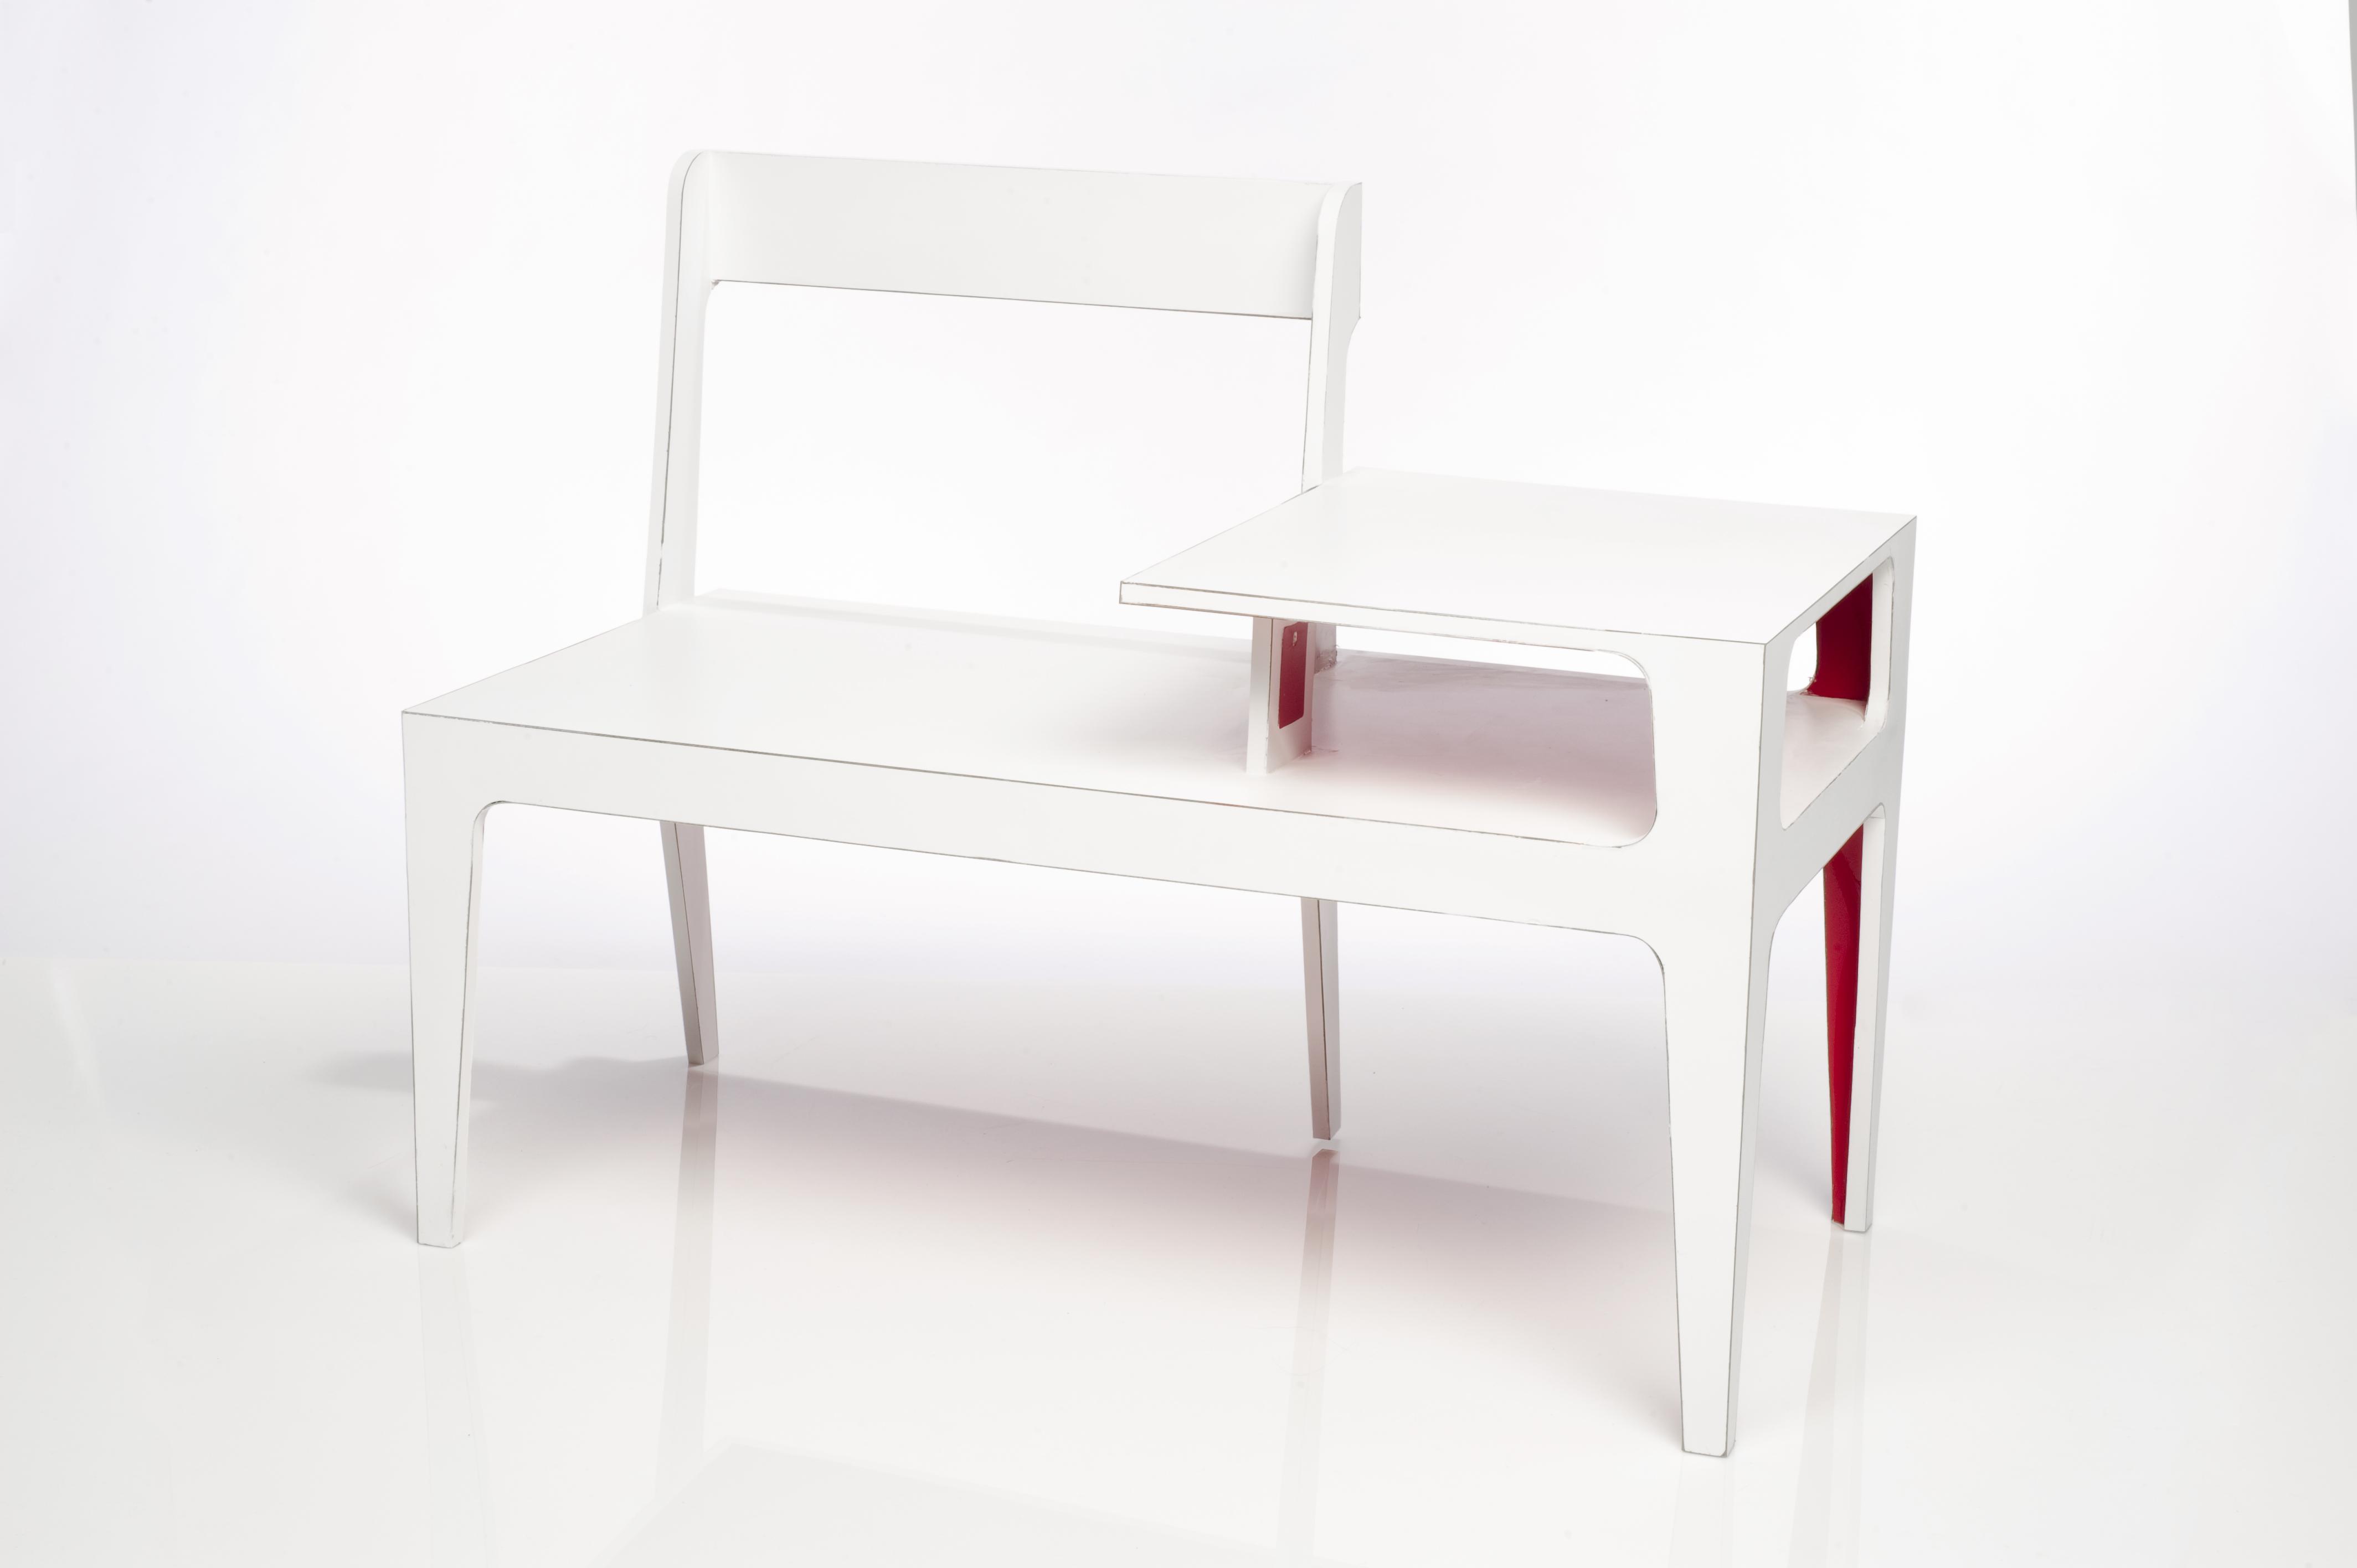 A chair-desk hybrid design.